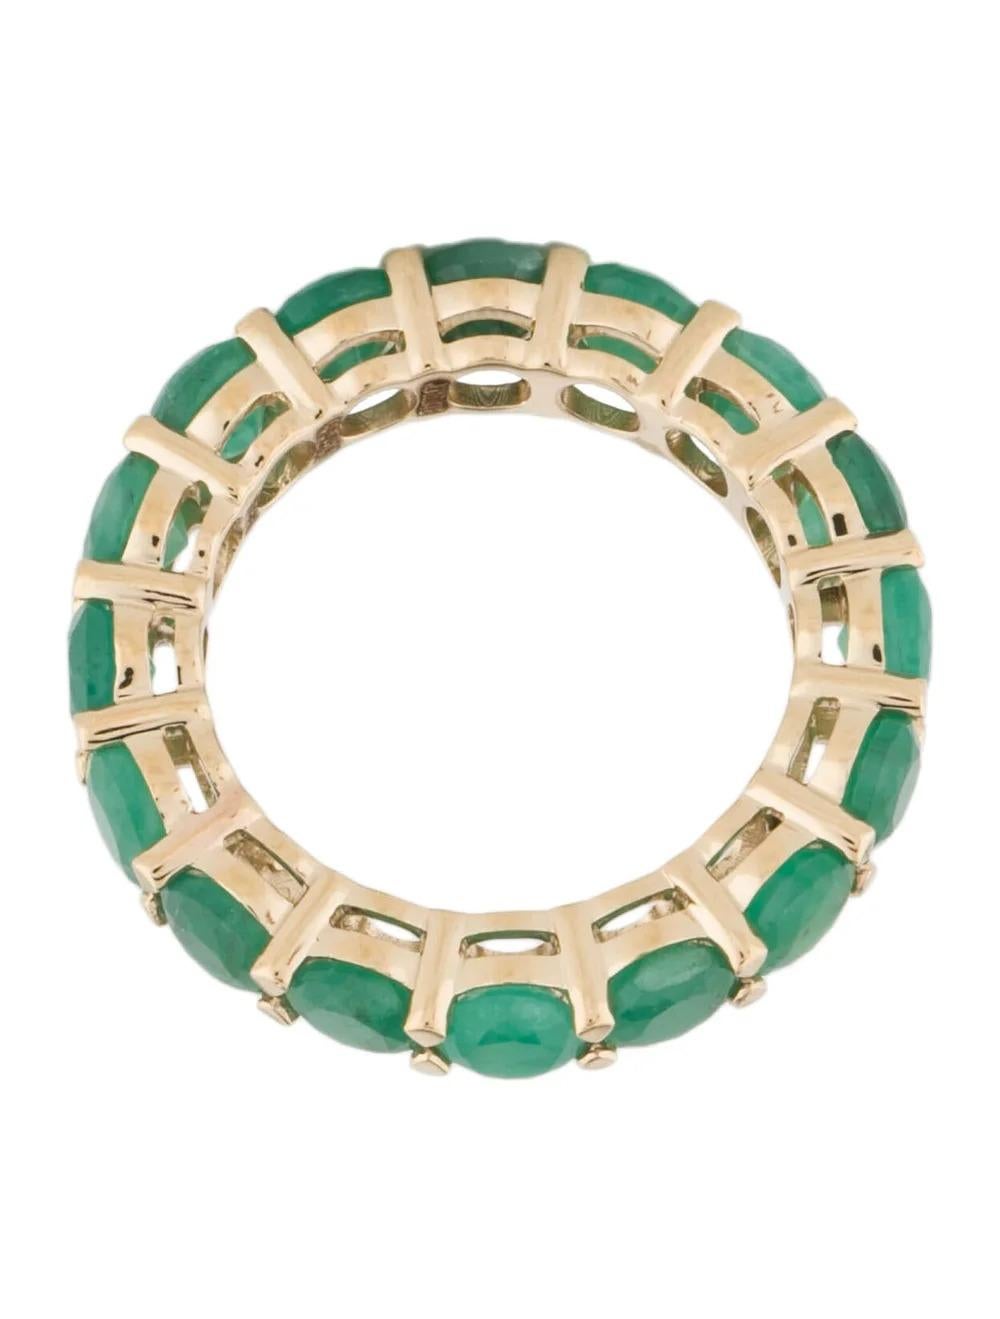 Women's Designer 14K Emerald Eternity Band Ring - 4.22ctw Size 7, Green Gemstone Jewelry For Sale